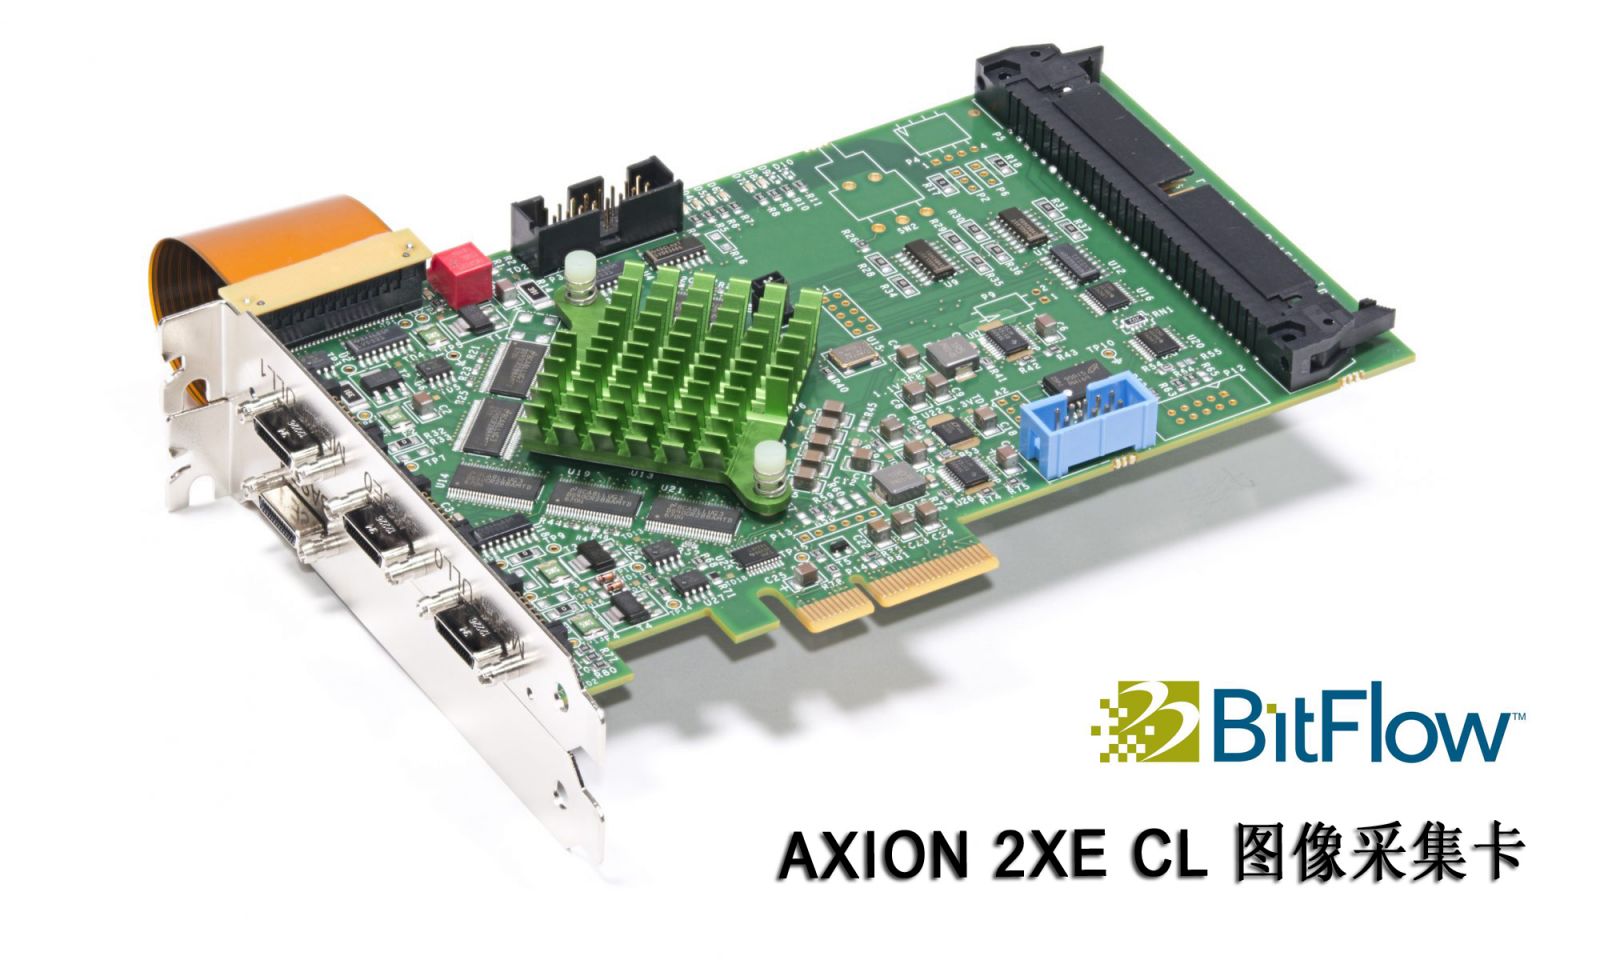 BitFlow Axion 2xE CL图像采集卡